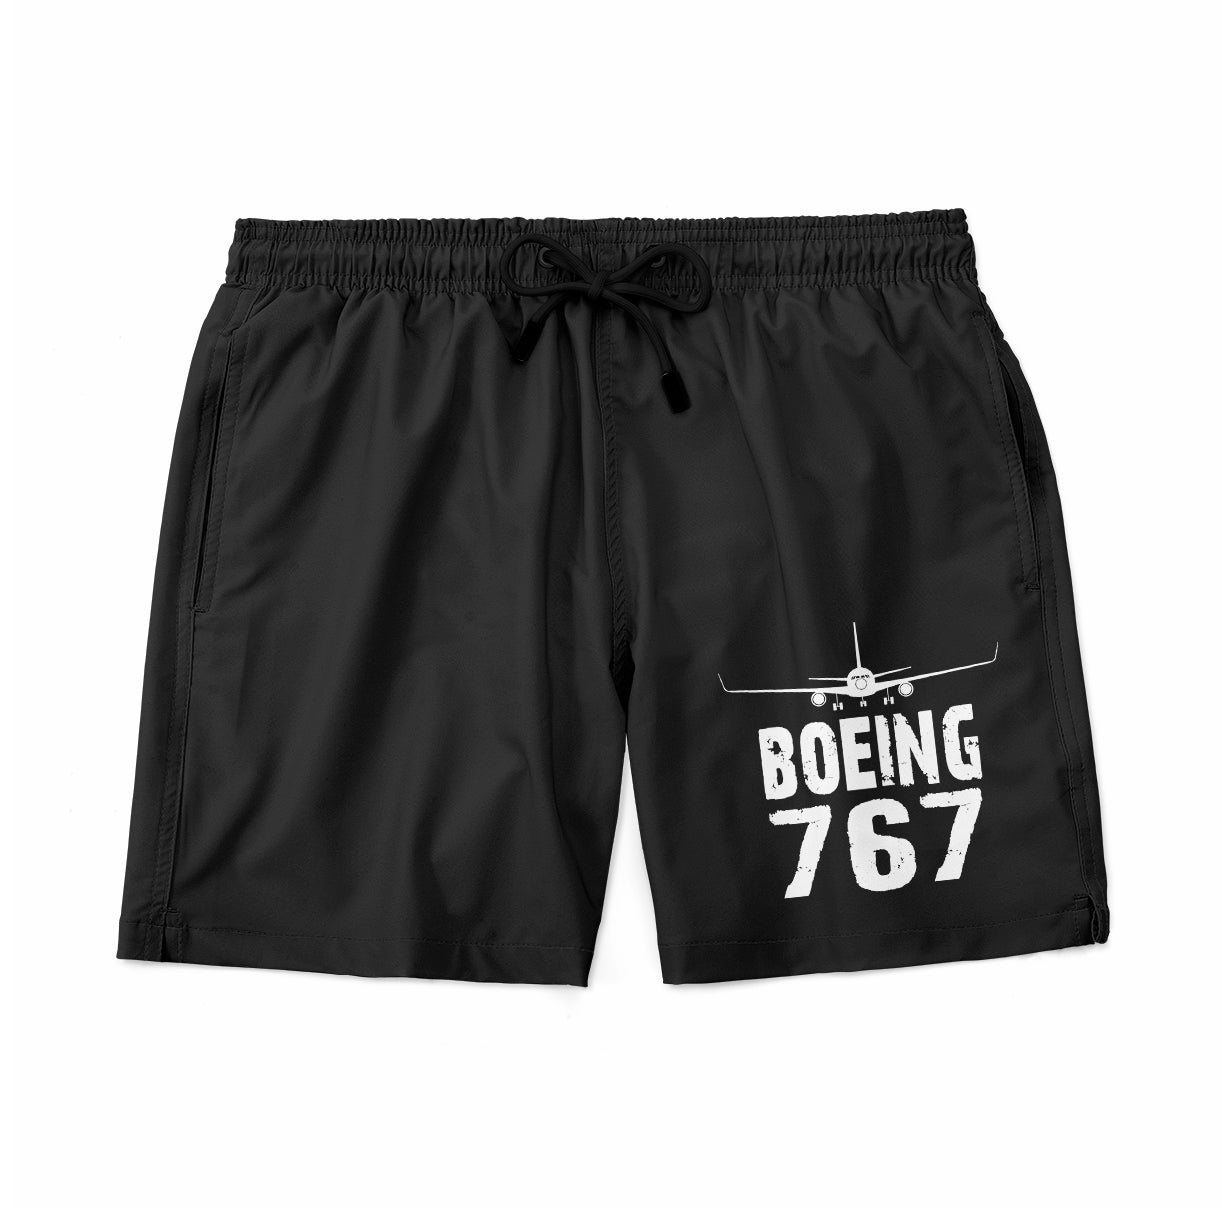 Boeing 767 & Plane Designed Swim Trunks & Shorts